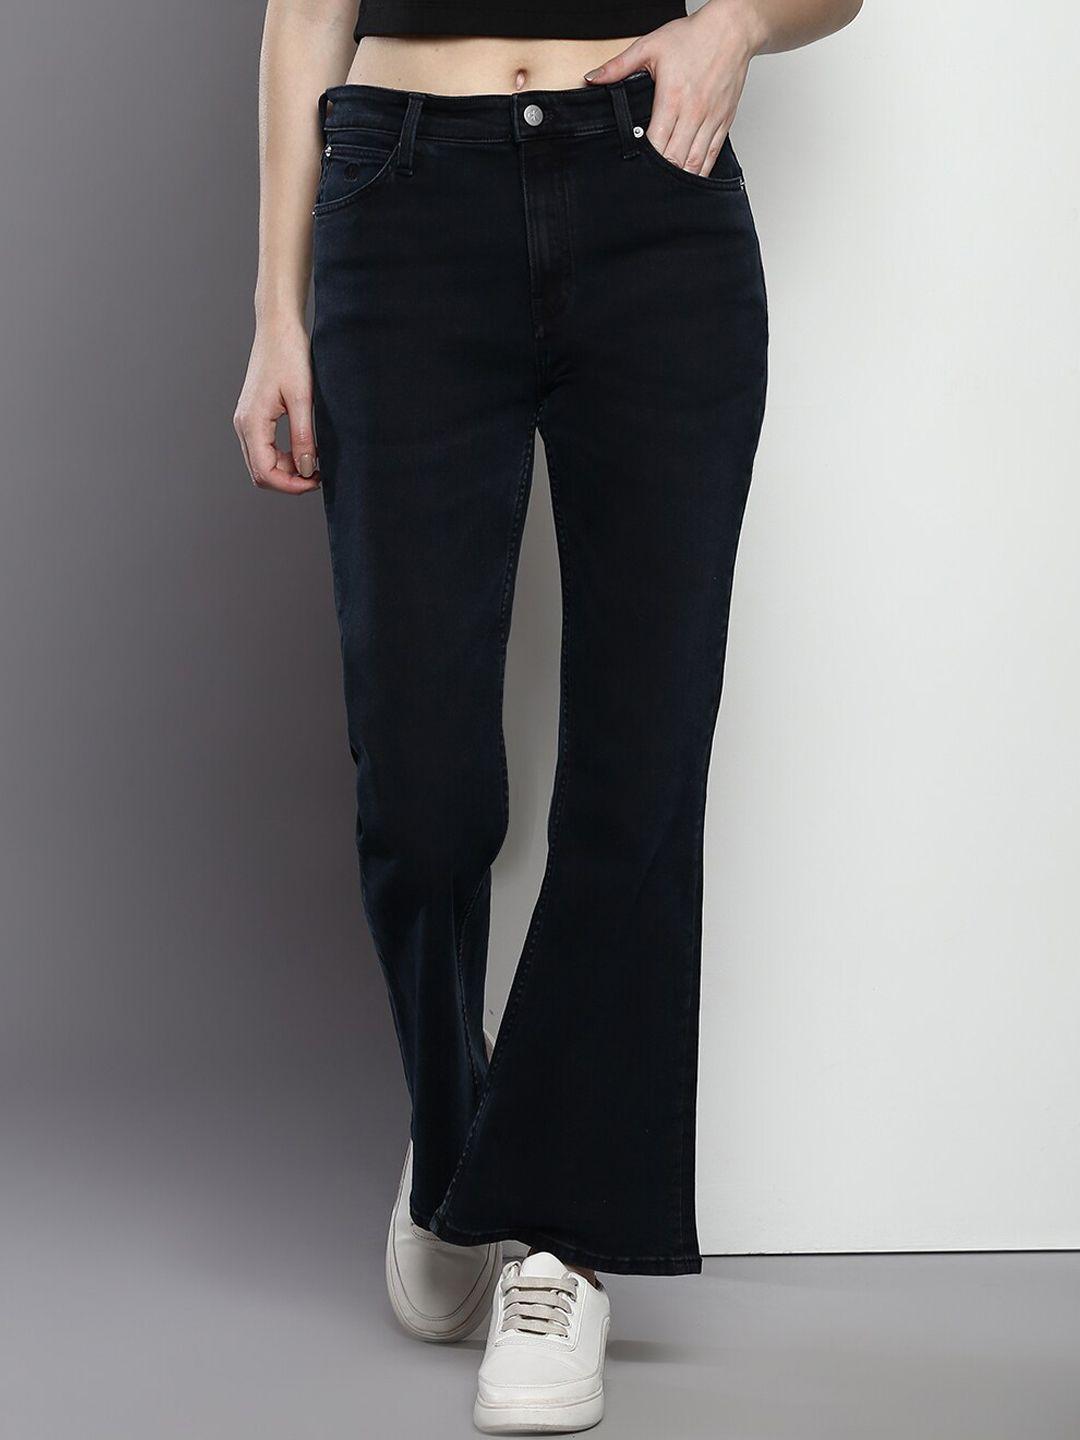 calvin-klein-jeans-women-bootcut-stretchable-jeans